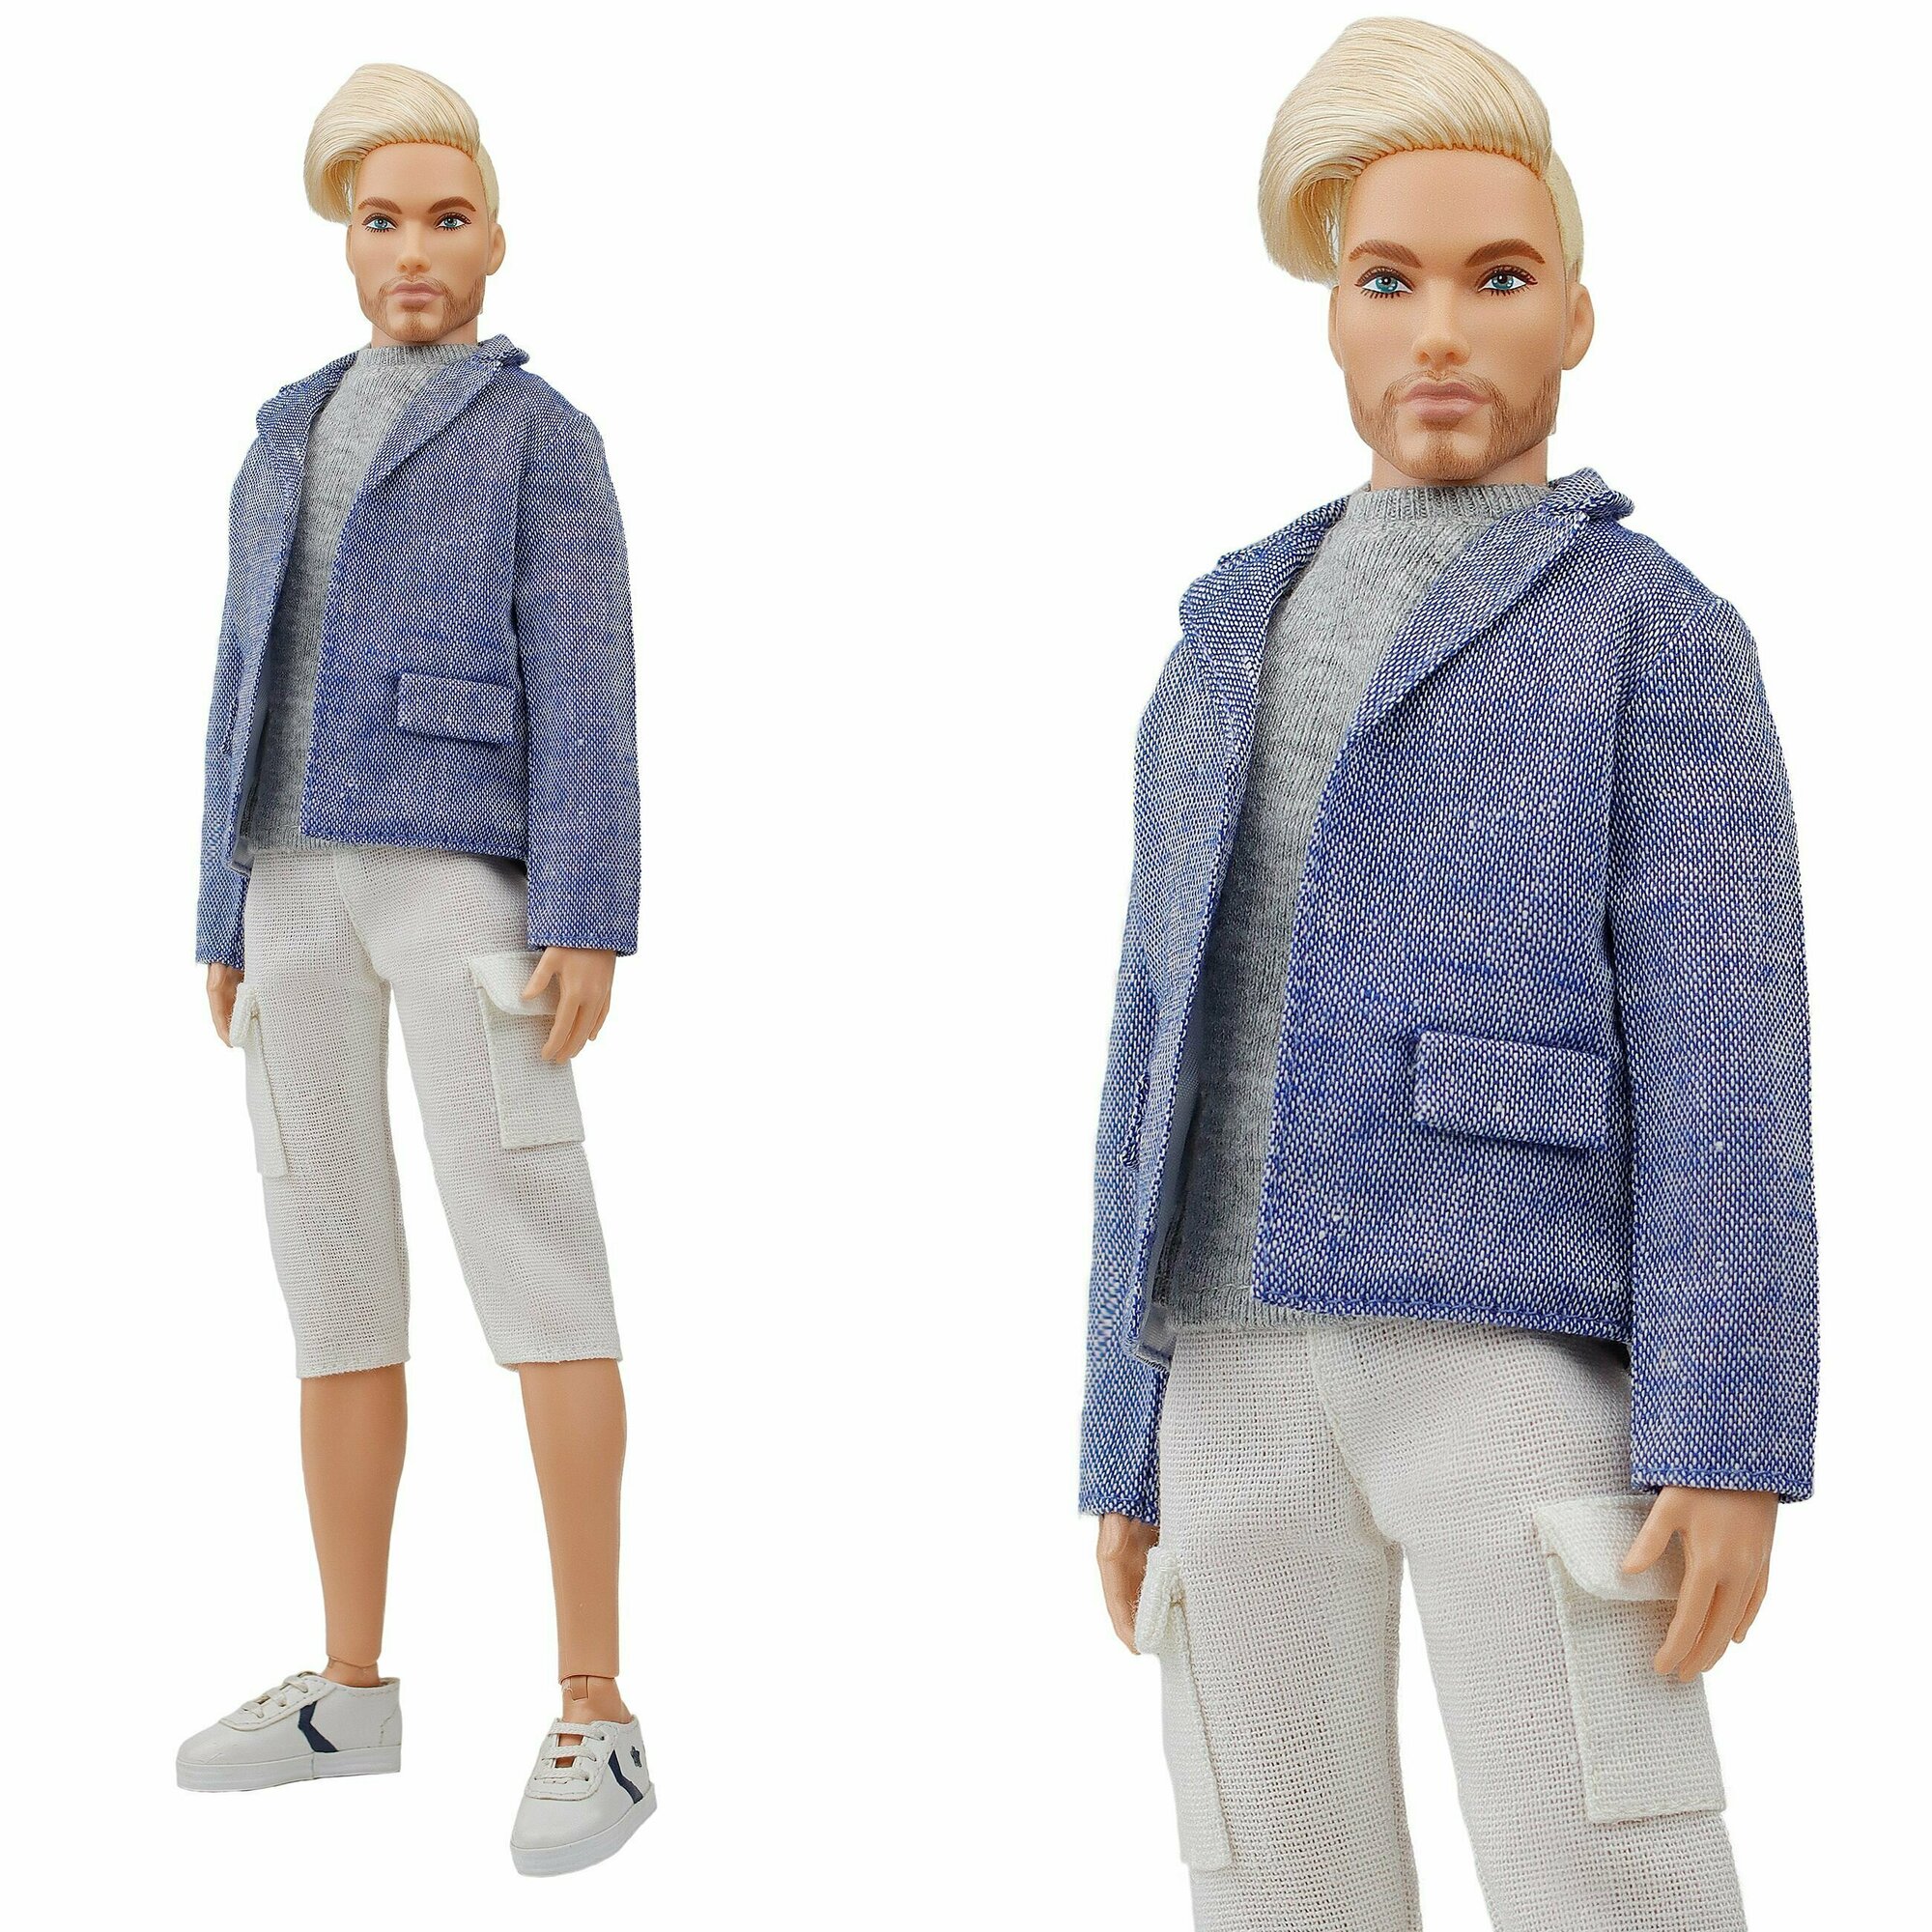 Пиджак одежда для куклы мальчика типа Кен (друг Барби) 30 см